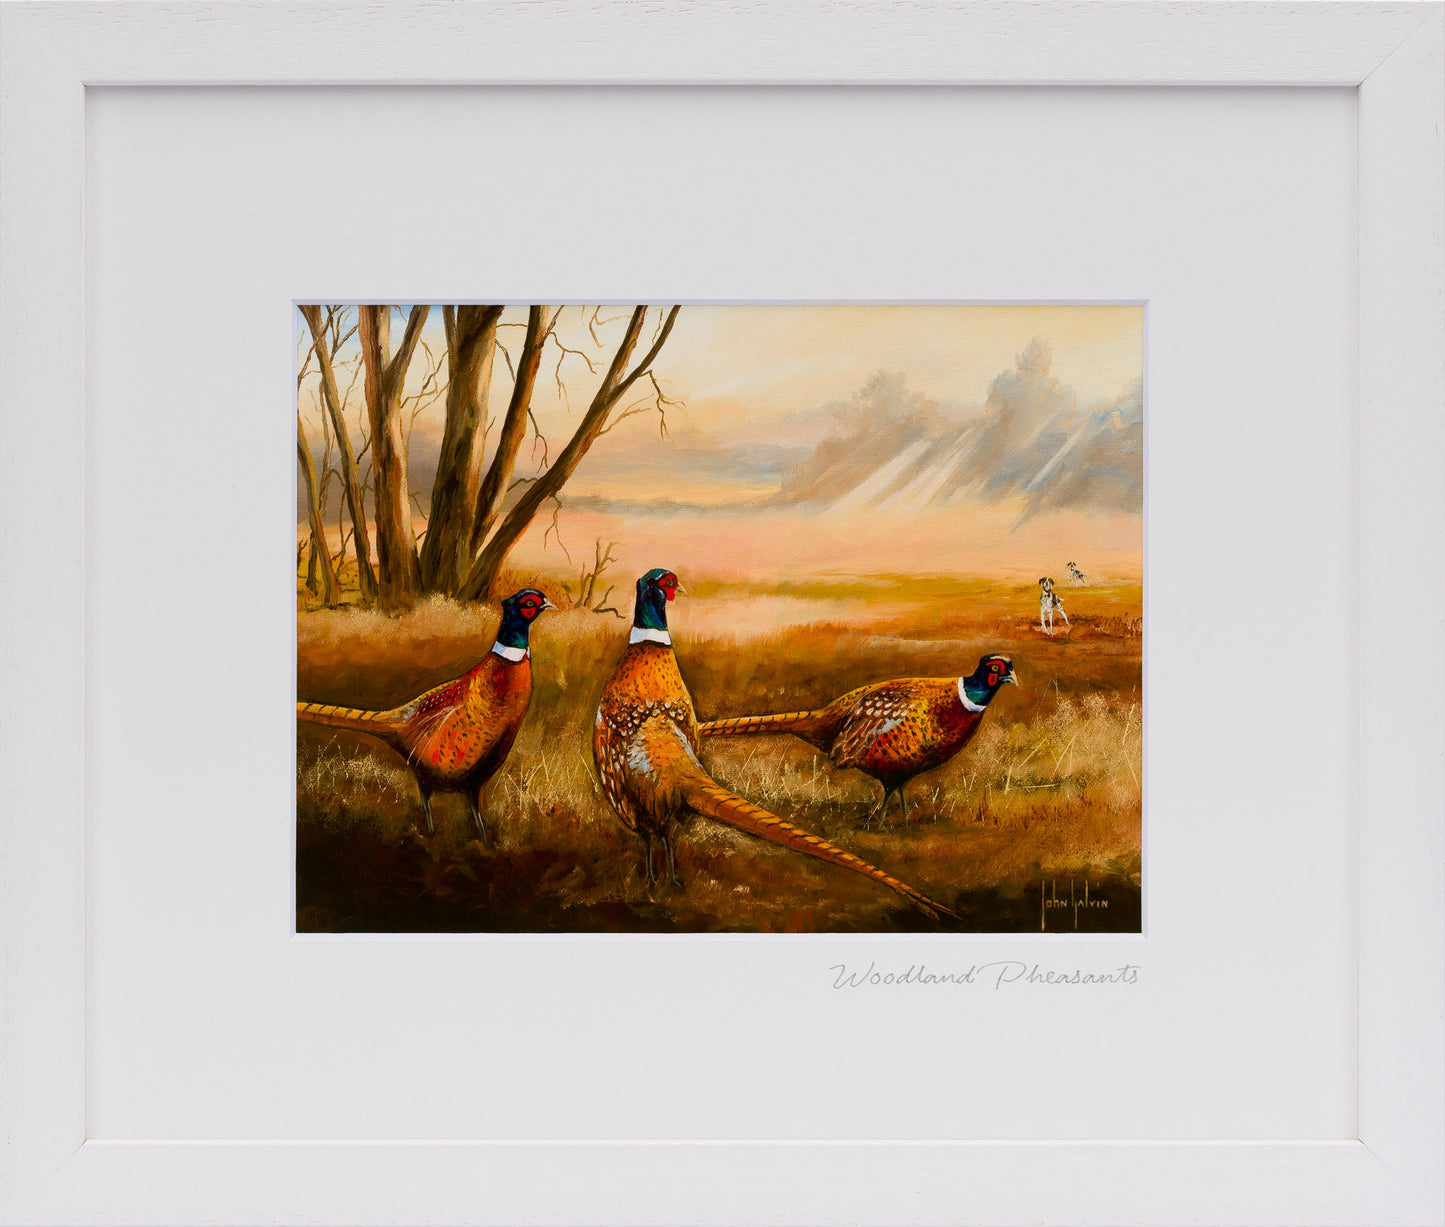 Woodland Pheasants